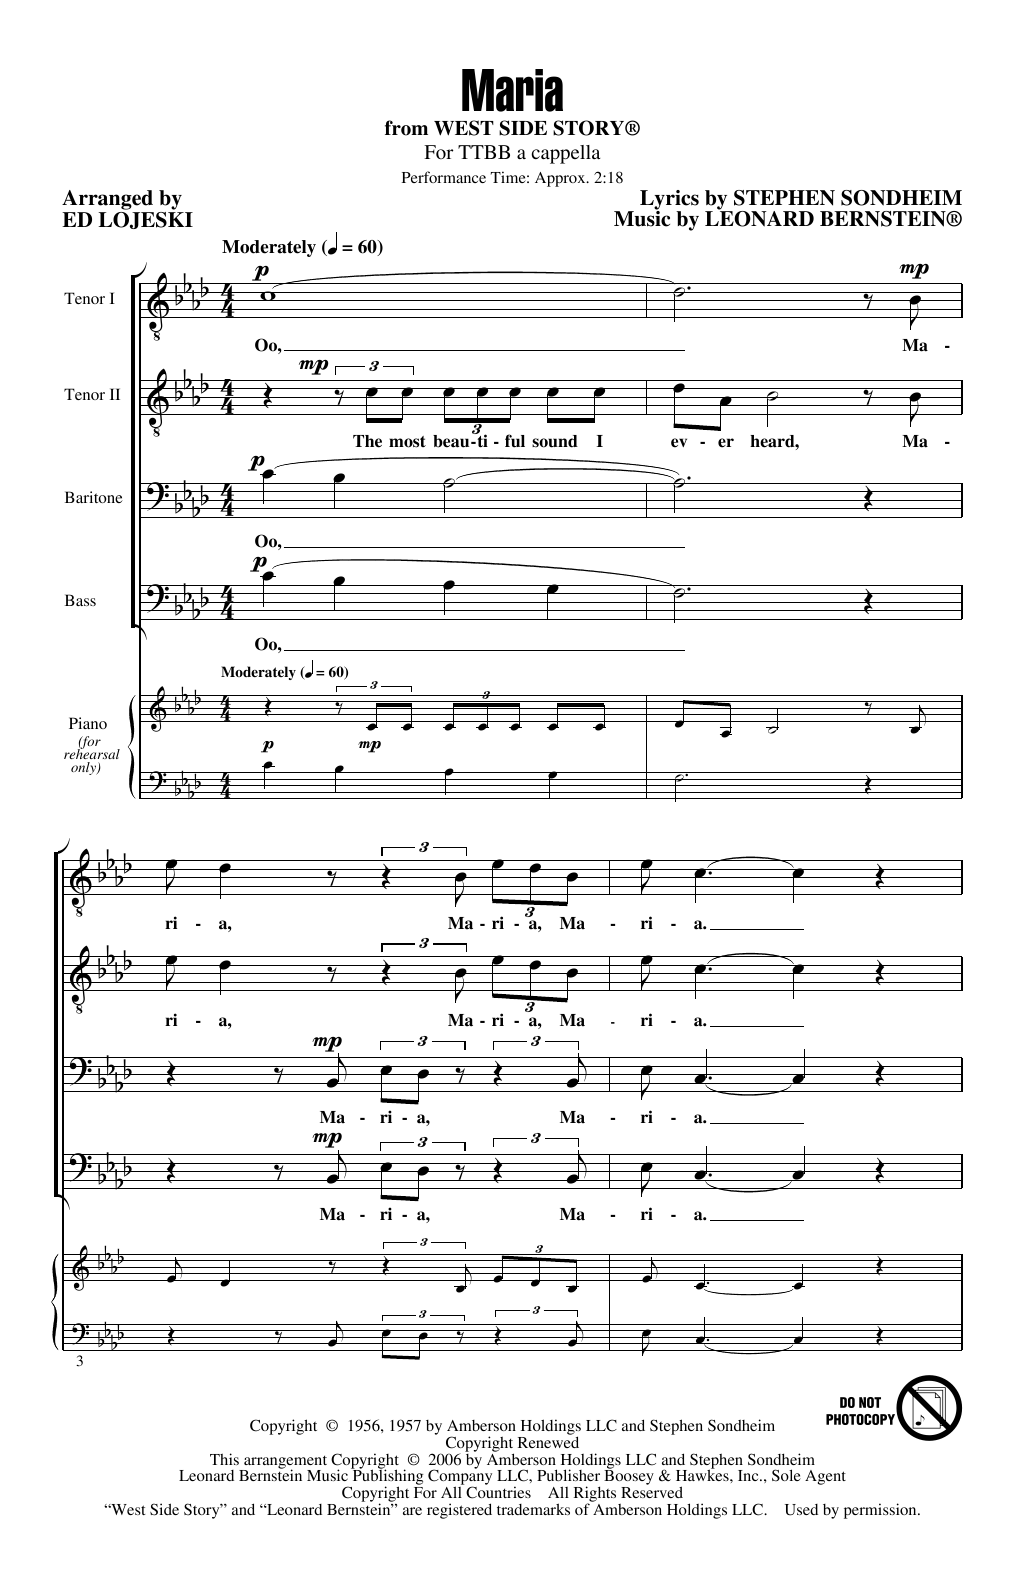 Leonard Bernstein Maria (from West Side Story) (arr. Ed Lojeski) Sheet Music Notes & Chords for TTBB Choir - Download or Print PDF